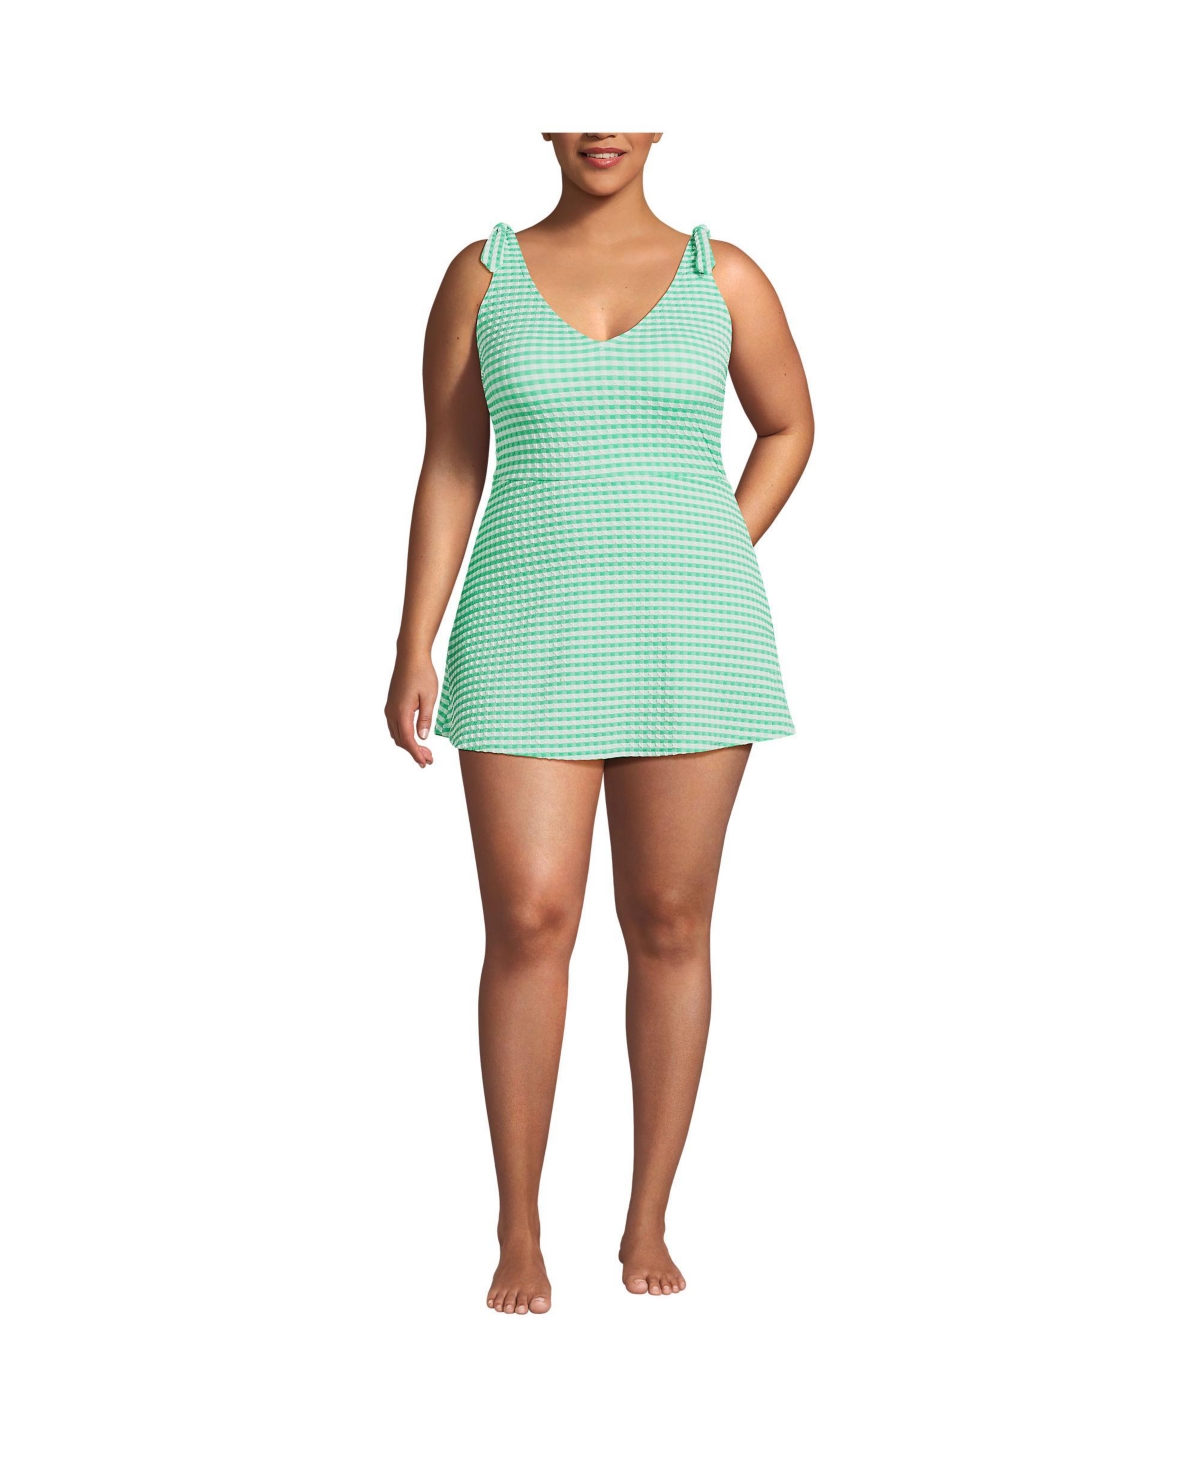 Plus Size Gingham Mini Swim Dress One Piece Swimsuit - Wintergreen/white gingham